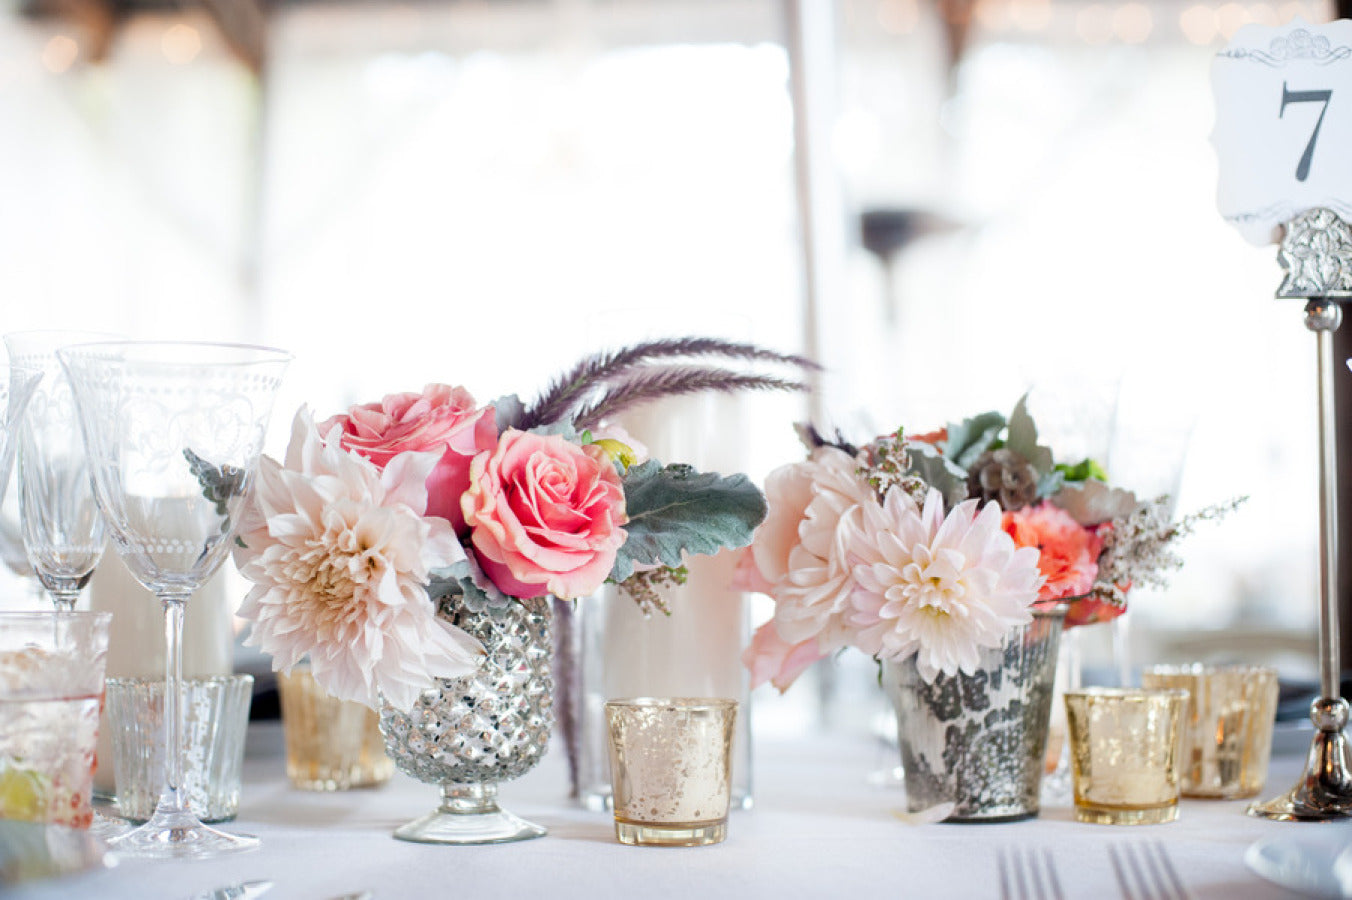 15 Inspiring Wedding Table Top Decorations